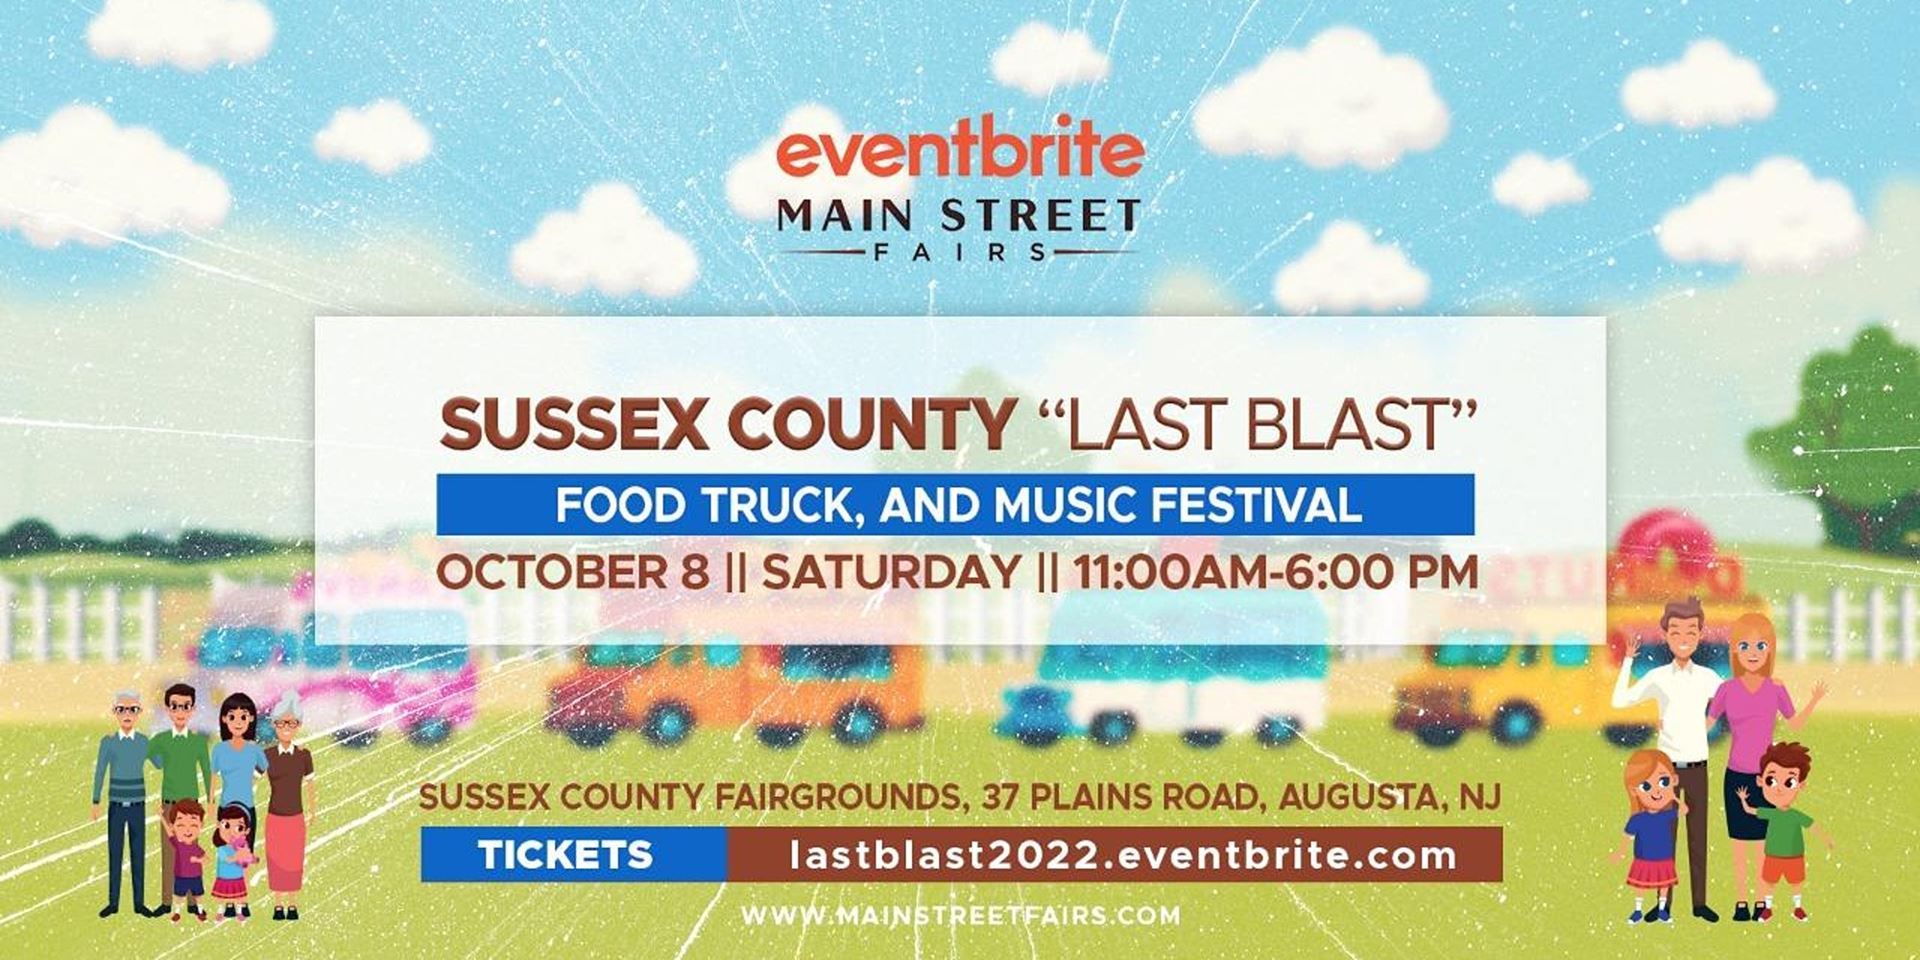 Sussex County "Last Blast" Food Truck, and Music Festival. October 8 Saturday 11:00AM - 6:00PM Sussex County FairGrounds, 37 Plains Road, Augusta, NJ. Tickets lastblast2022.eventbrite.com